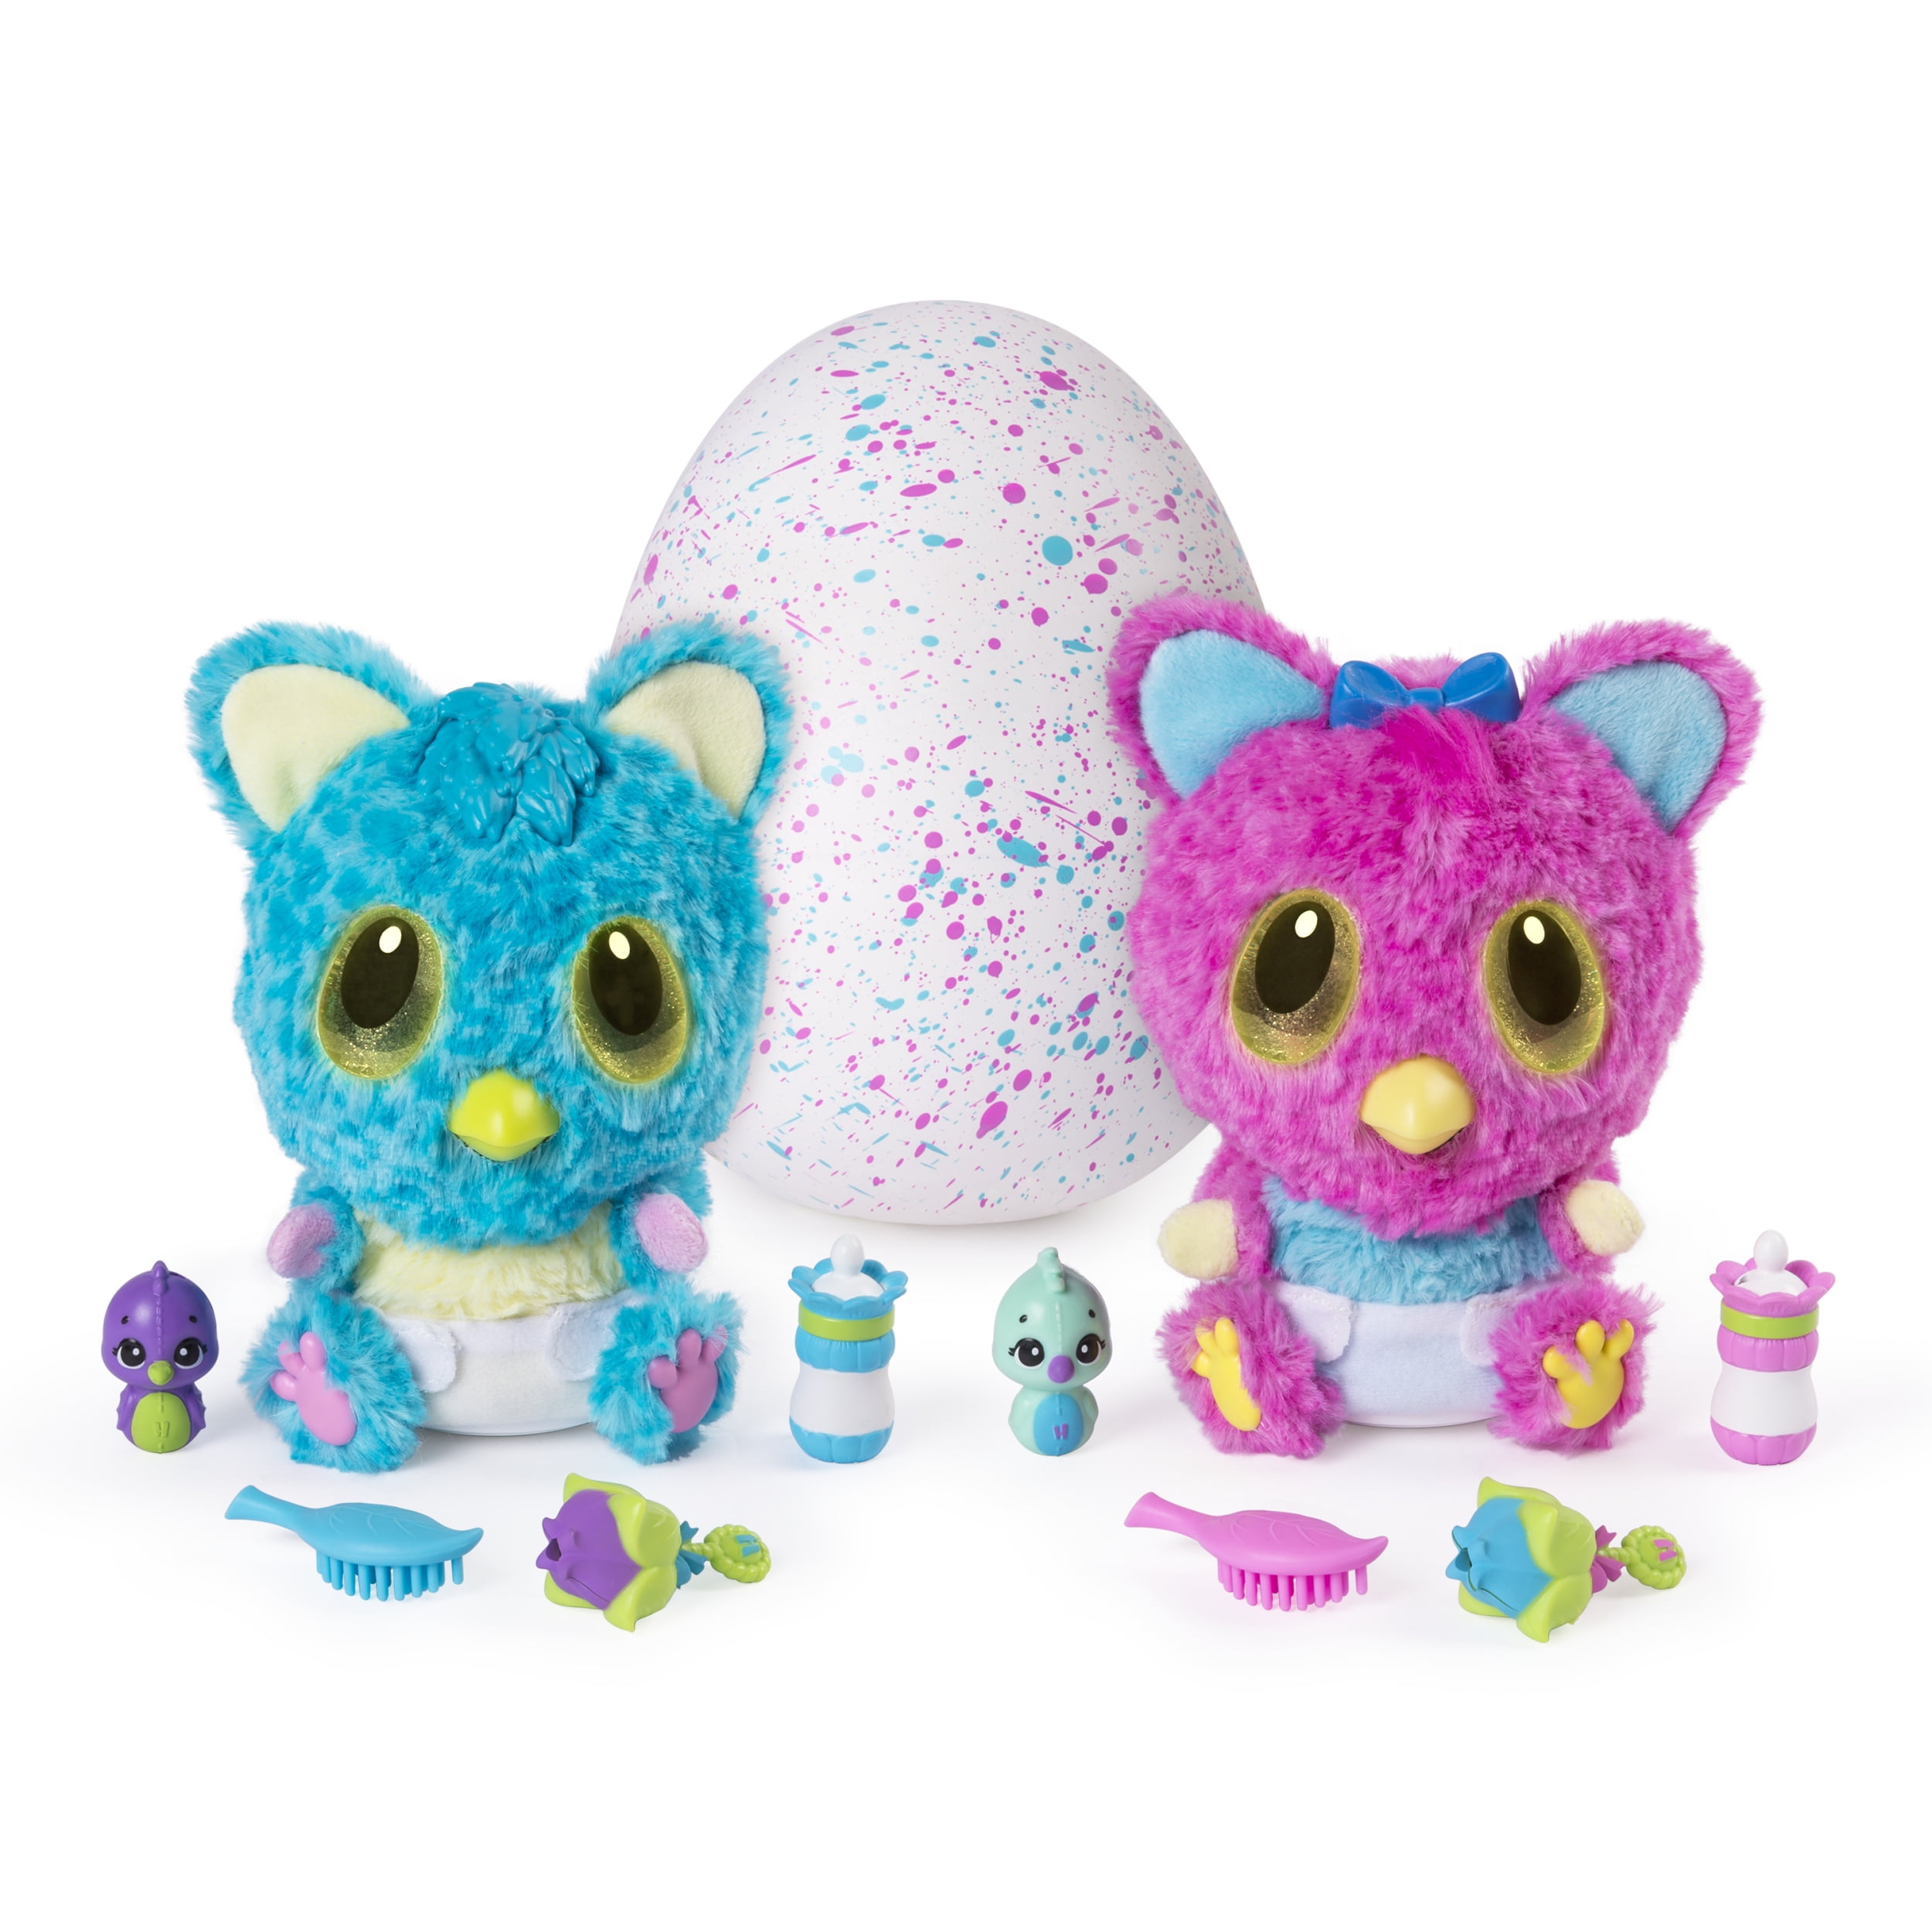 6046467 for sale online Hatchimals HatchiBabies Surprise Egg with Interactive Pet 